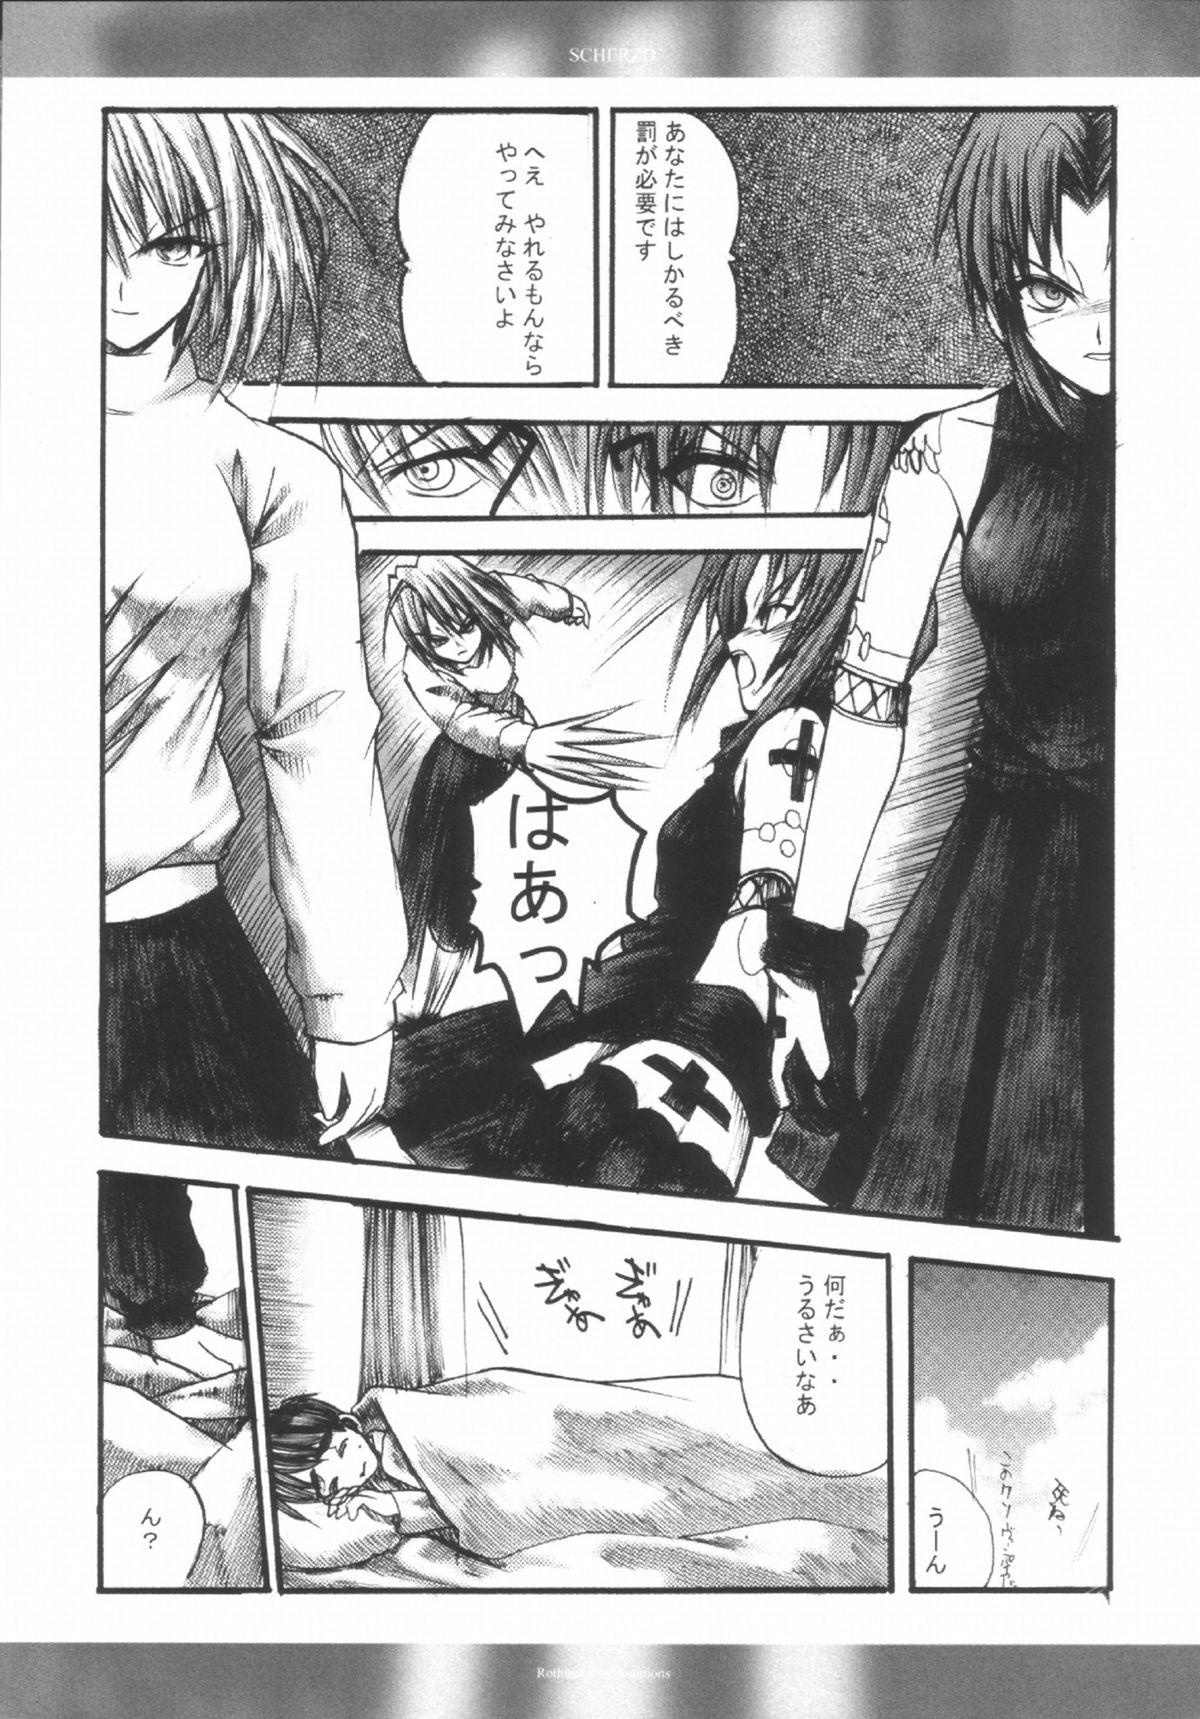 Spoon SCHERZO - Tsukihime Arabe - Page 8